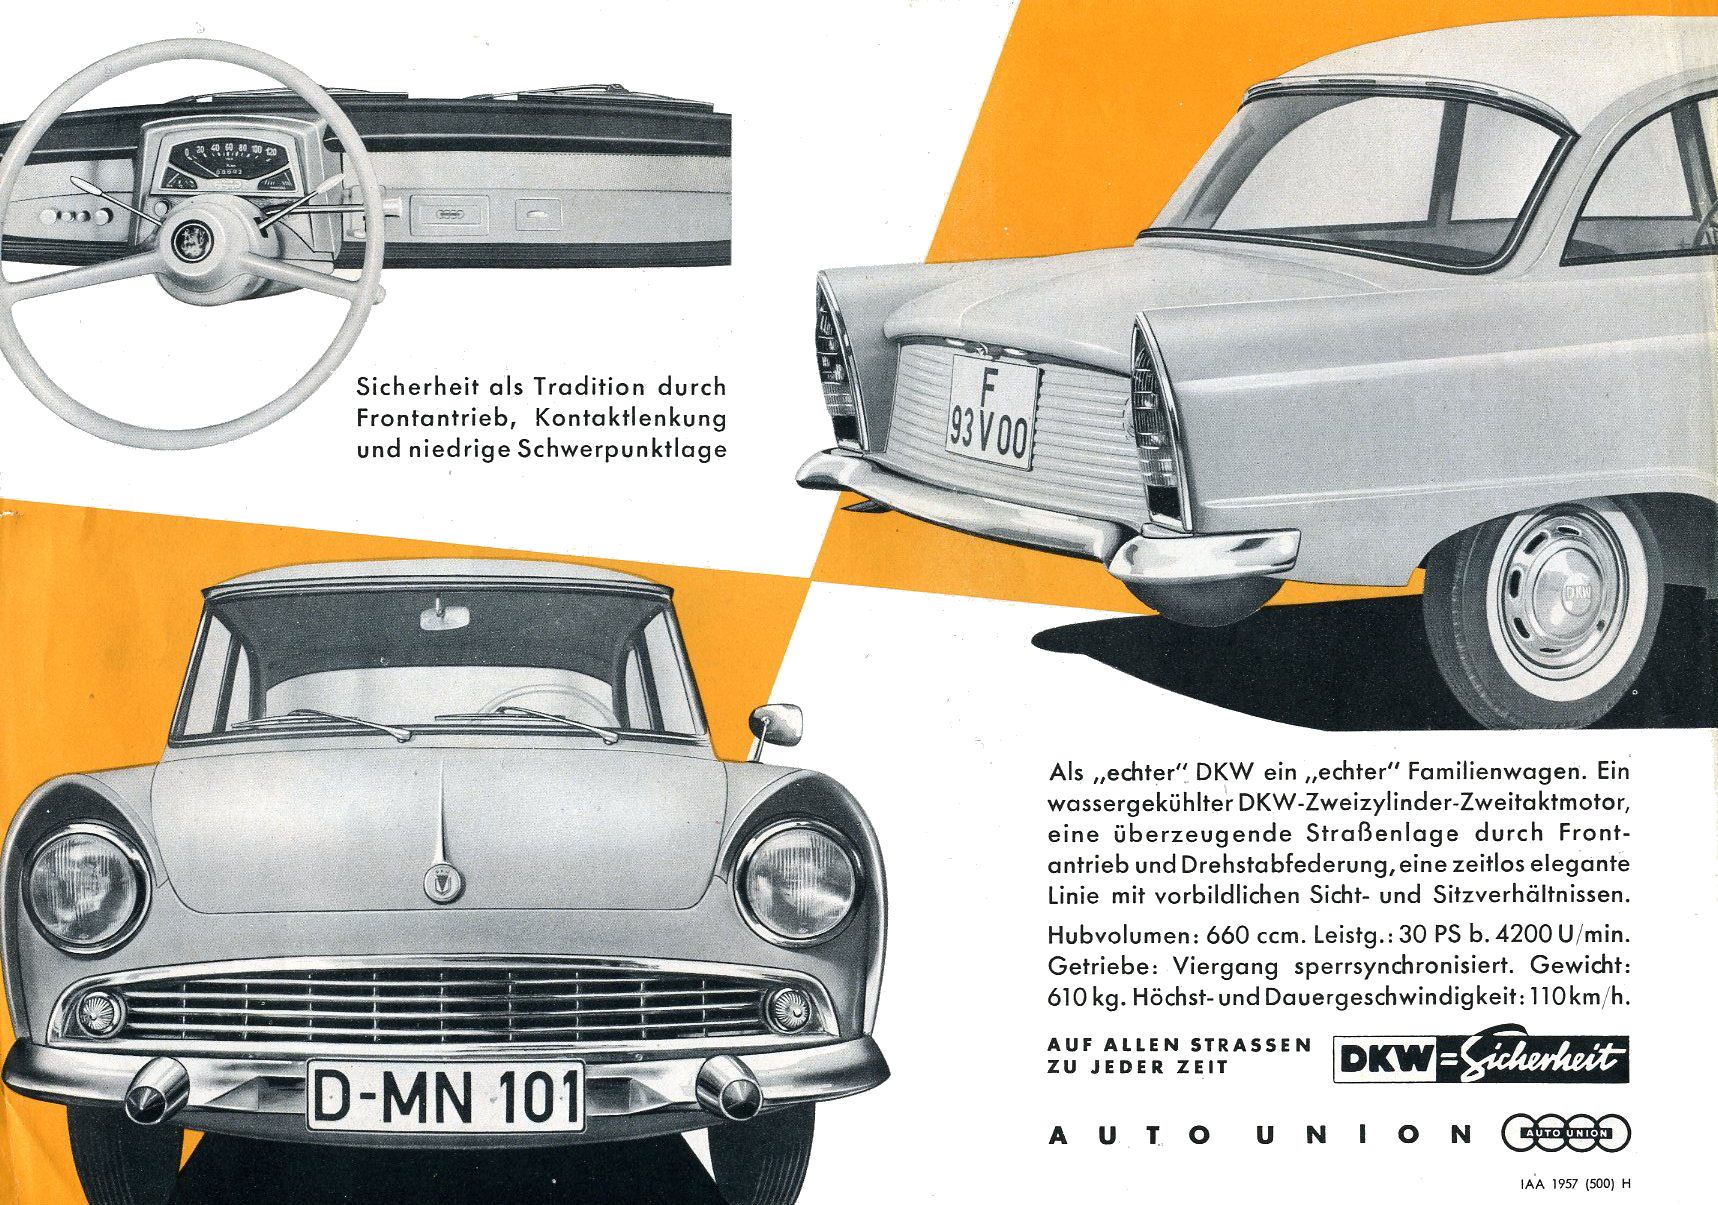 DKW Auto-Union Project: 1957 DKW 600 International